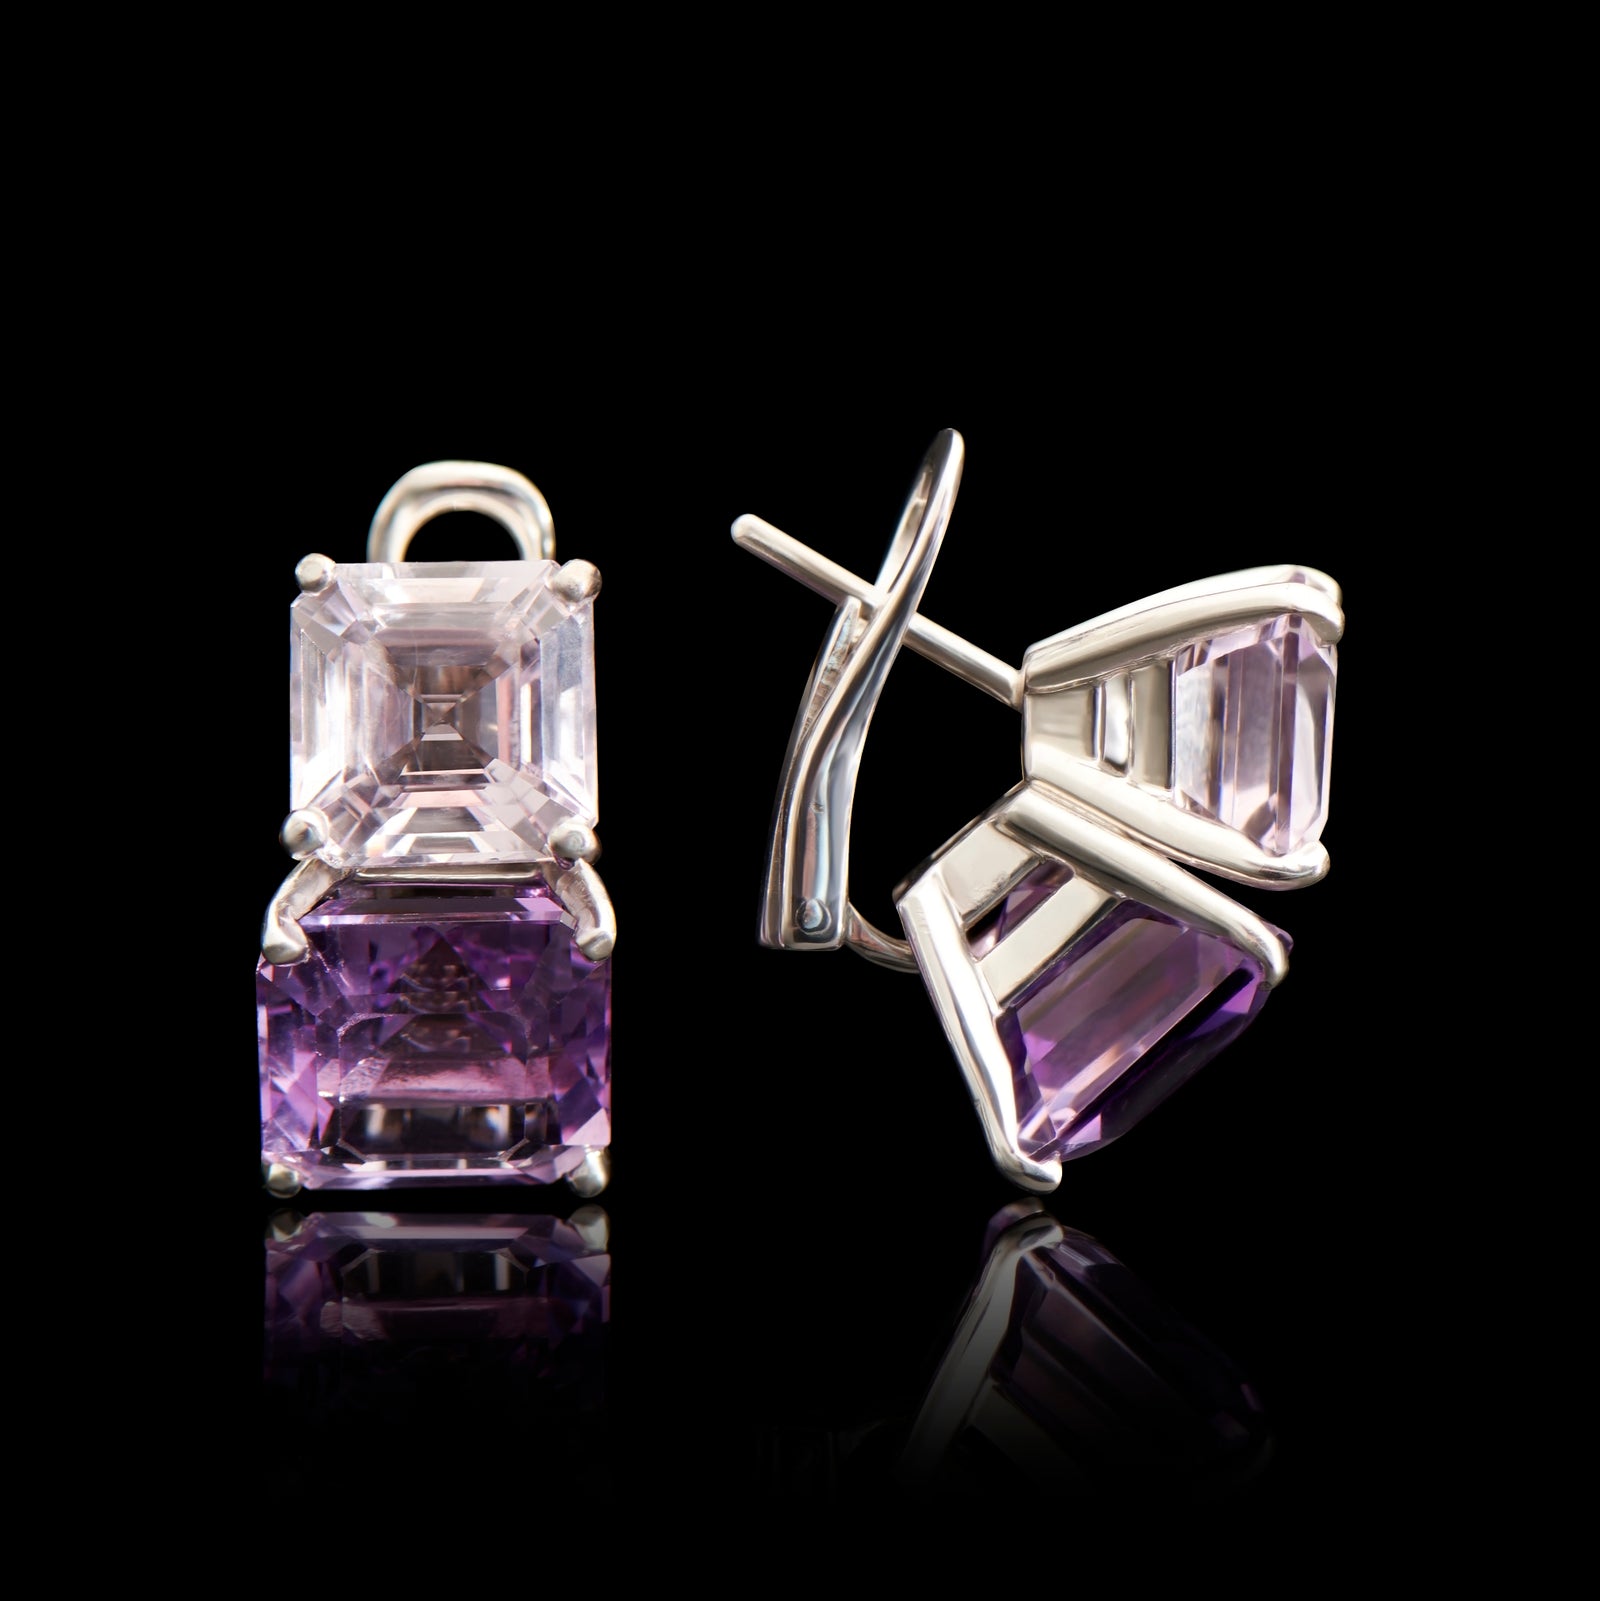 A pair of unique amethyst & kunzite earrings